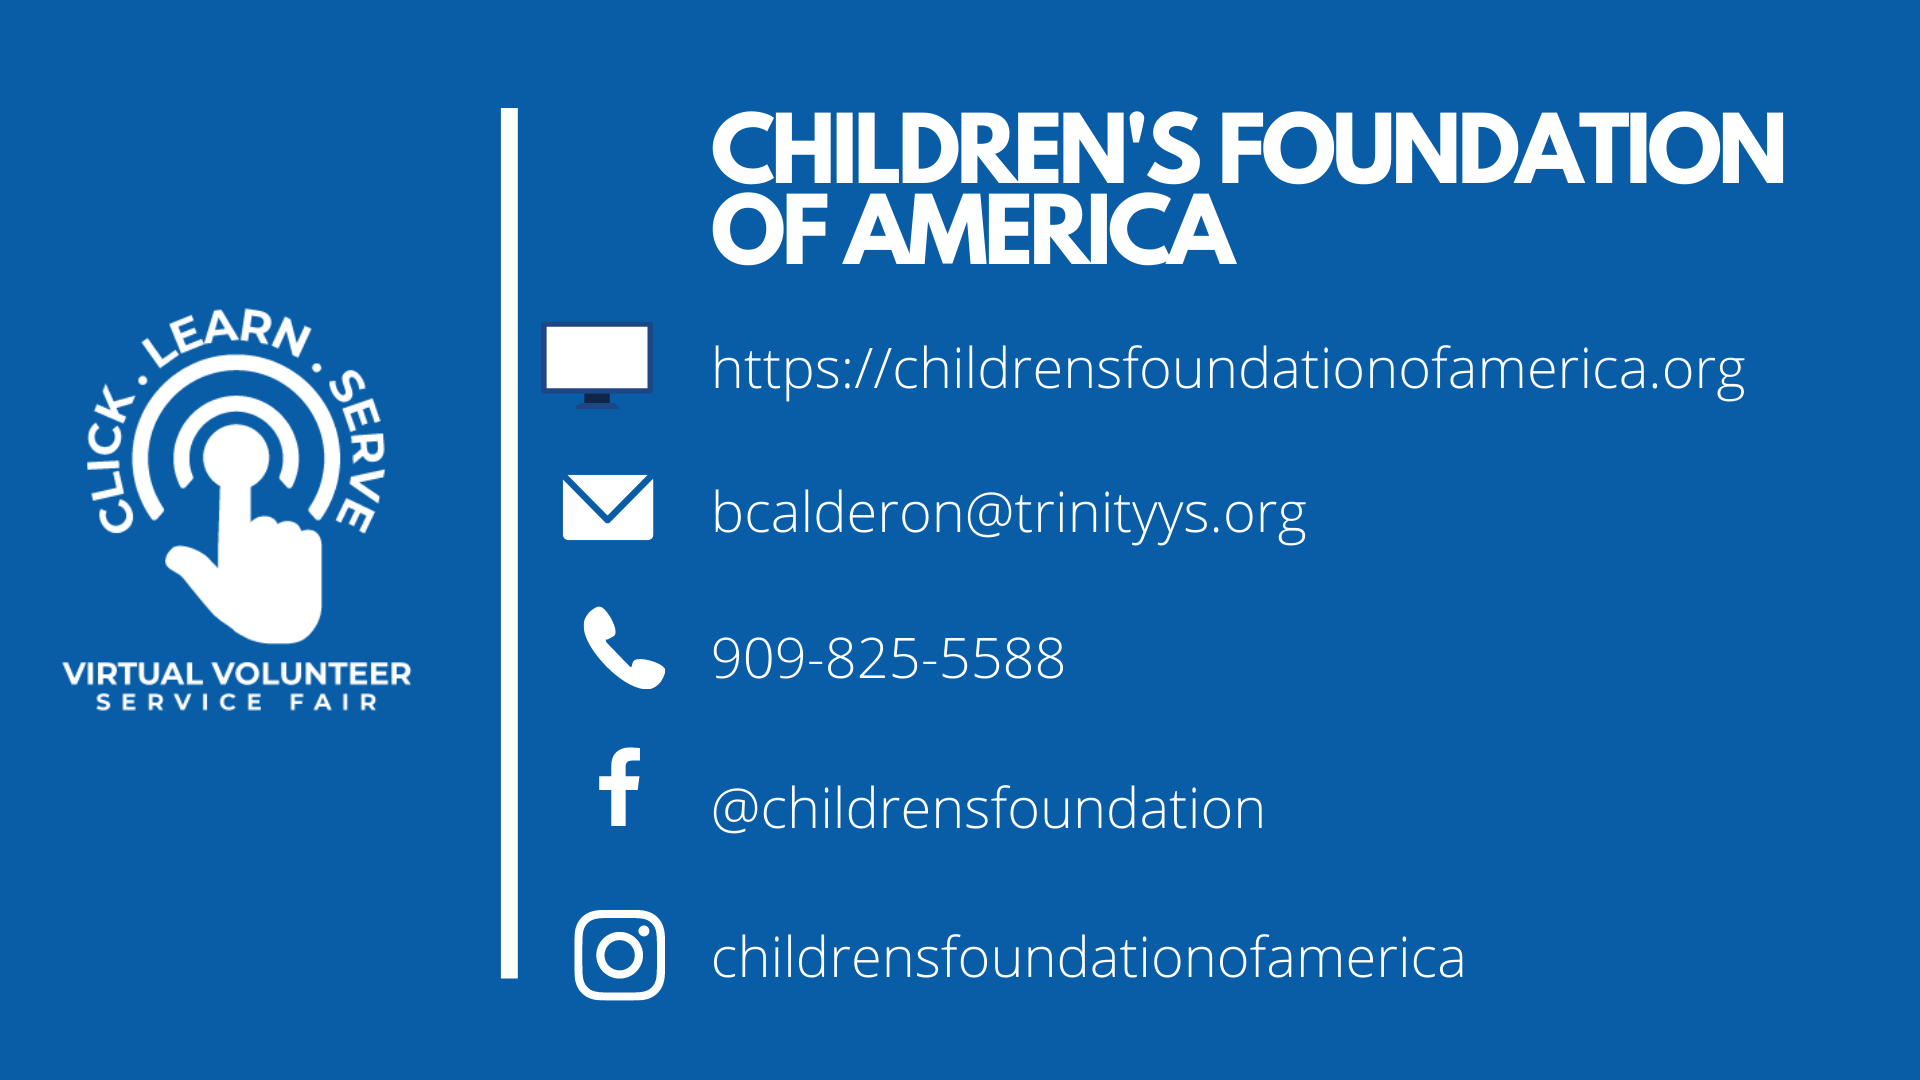 Children's Foundation of America nonprofit video for the Virtual Volunteer Fair.